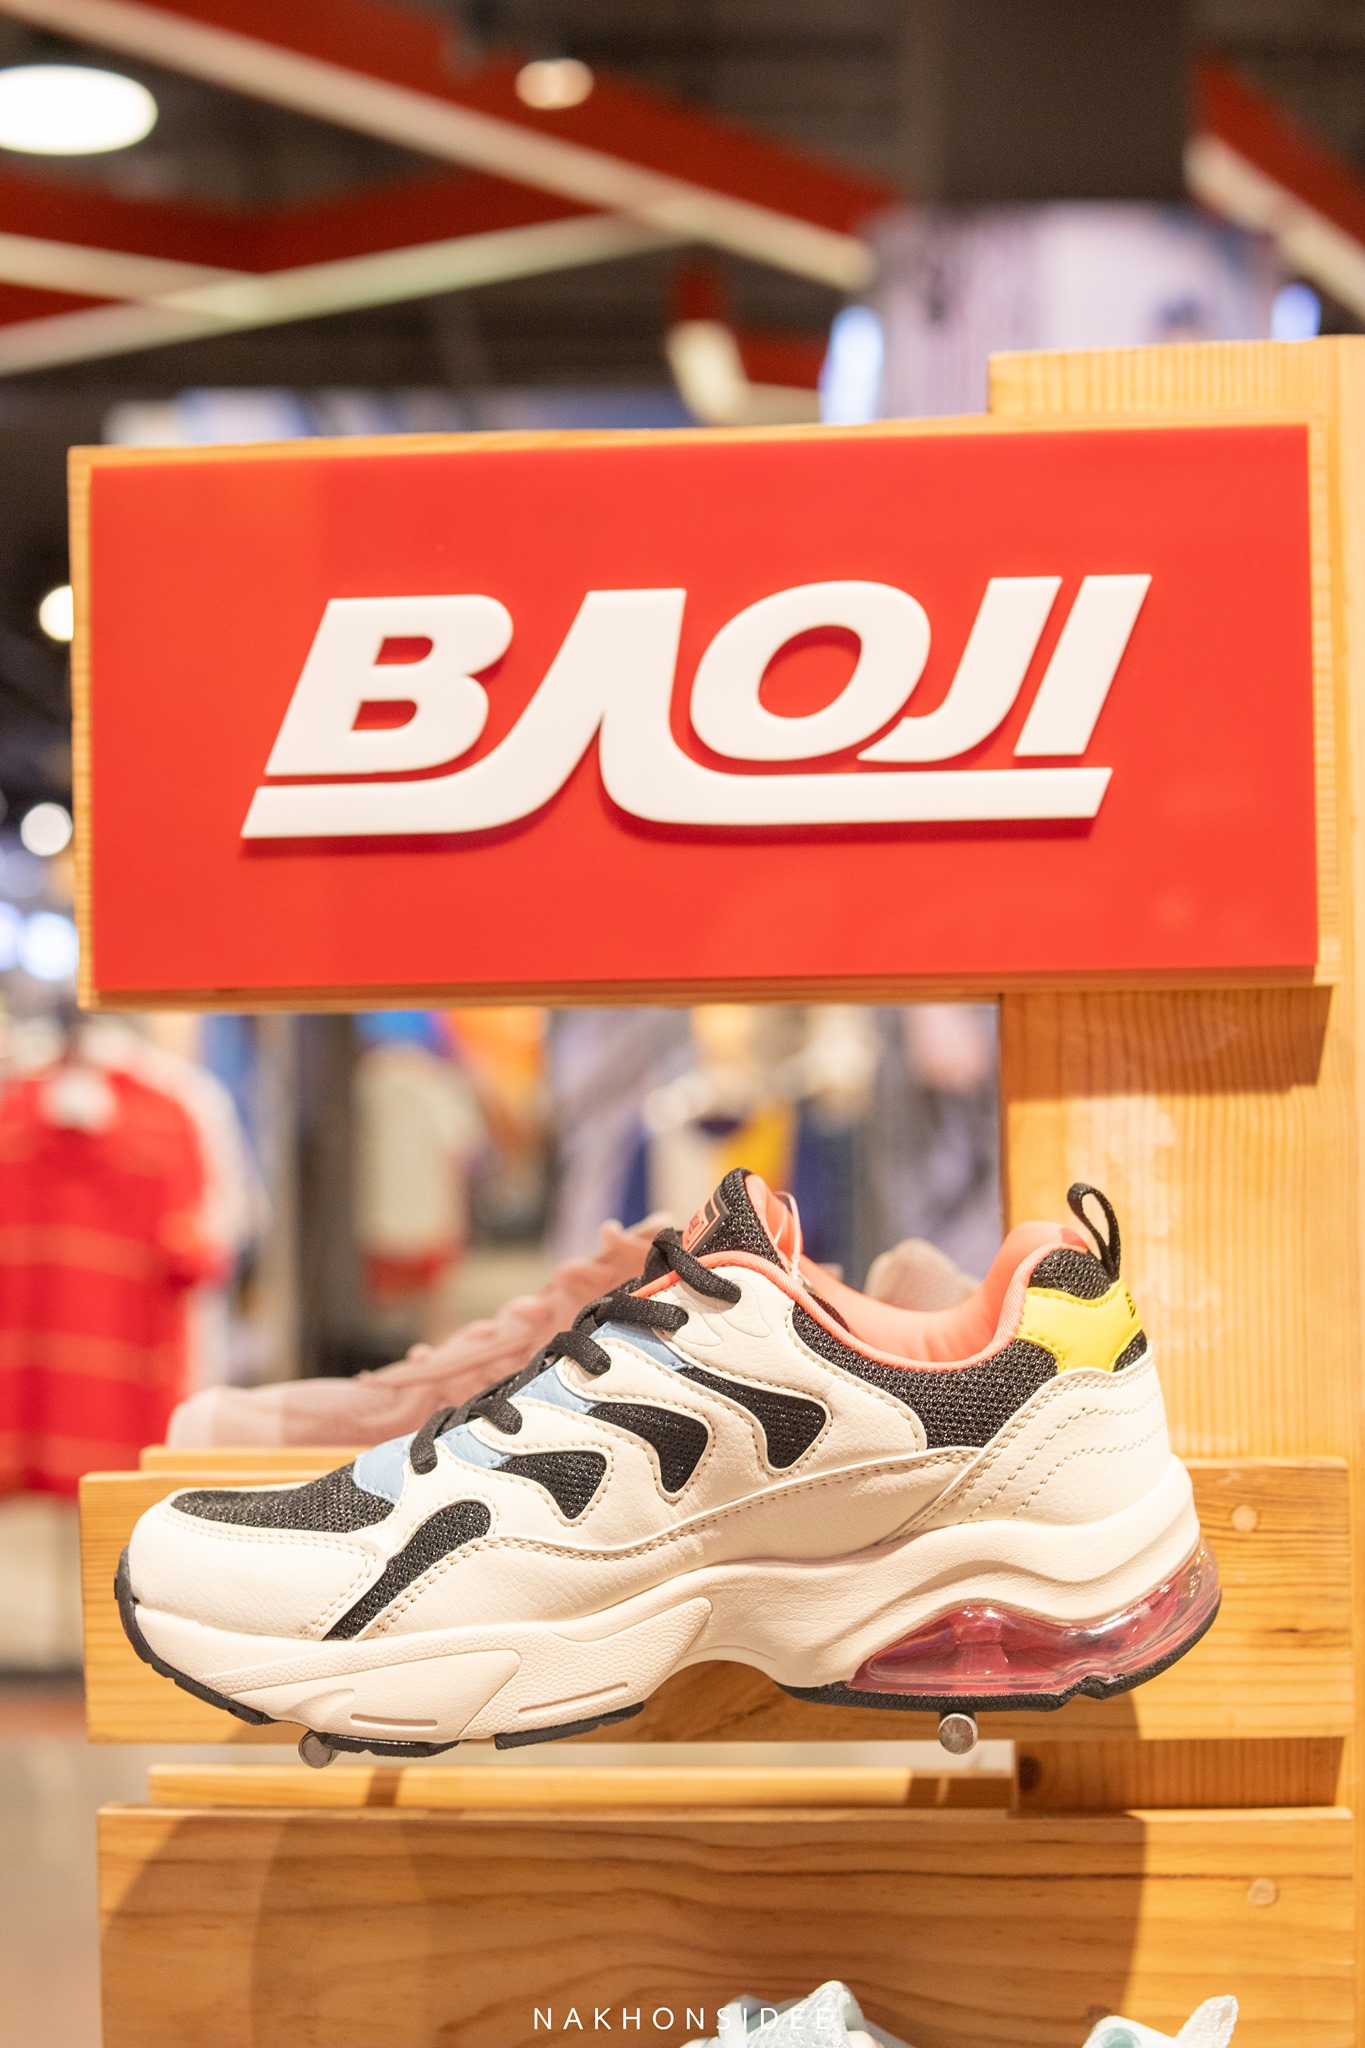  Baoji-รุ่น-Code-Dpw704
รองเท้า-Baoji-Sport-ลายสวยๆมีสไตล์แบบปังๆ

ราคา-1590-บาท โรบินสัน,นครศรีธรรมราช